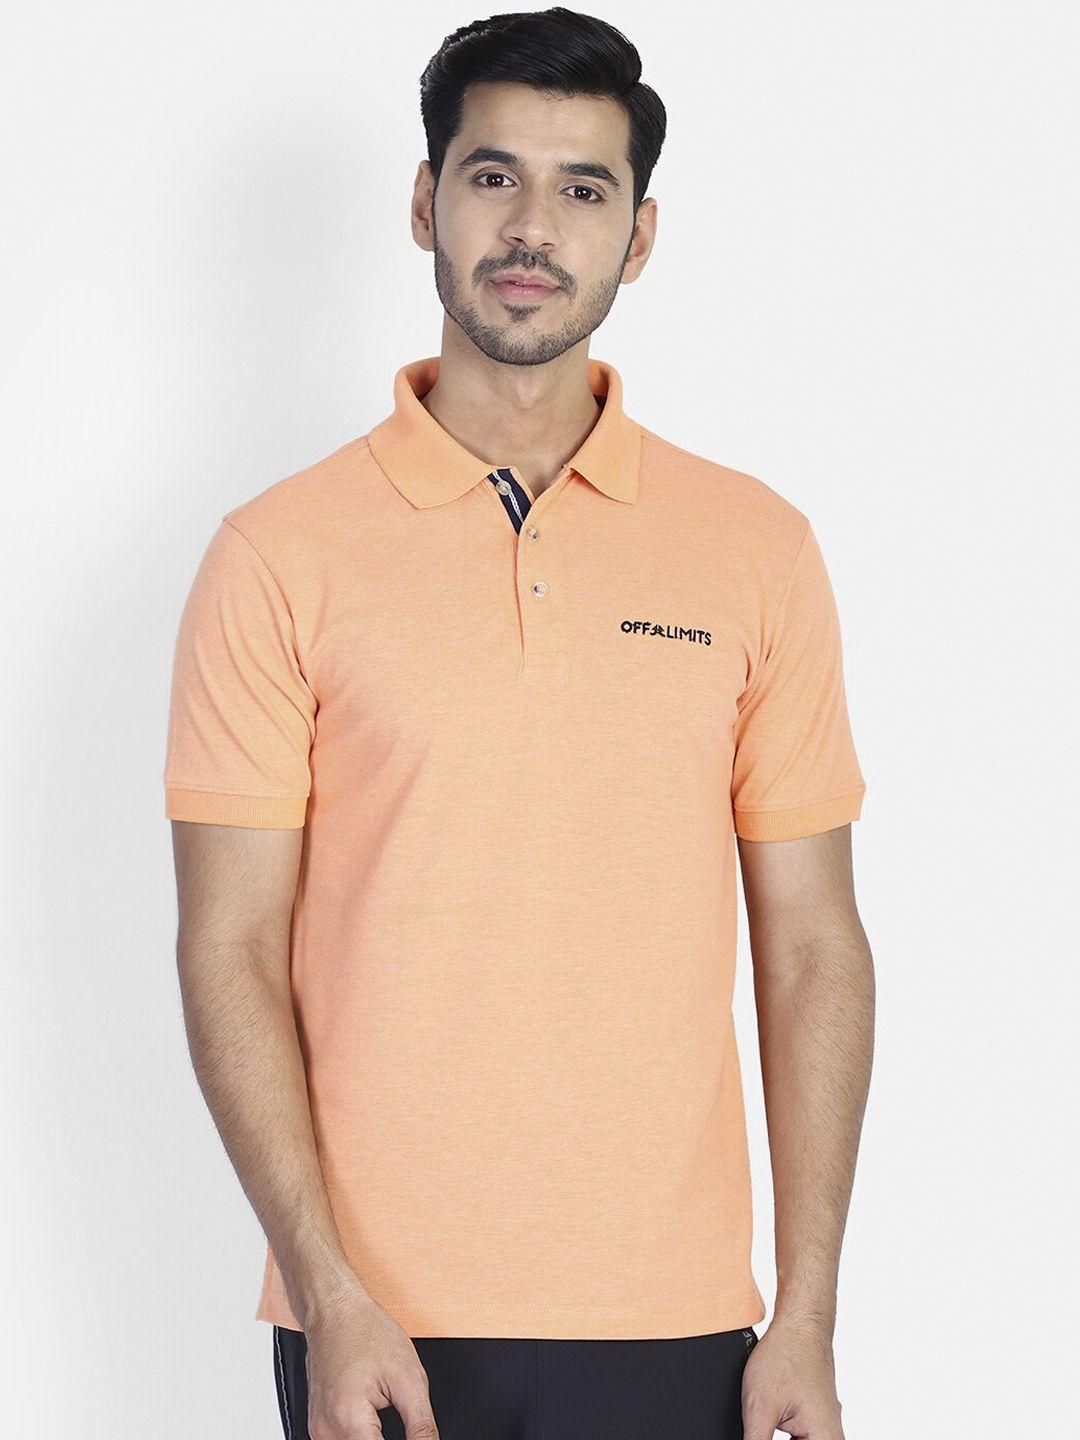 off-limits-men-orange-solid-polo-collar-t-shirt